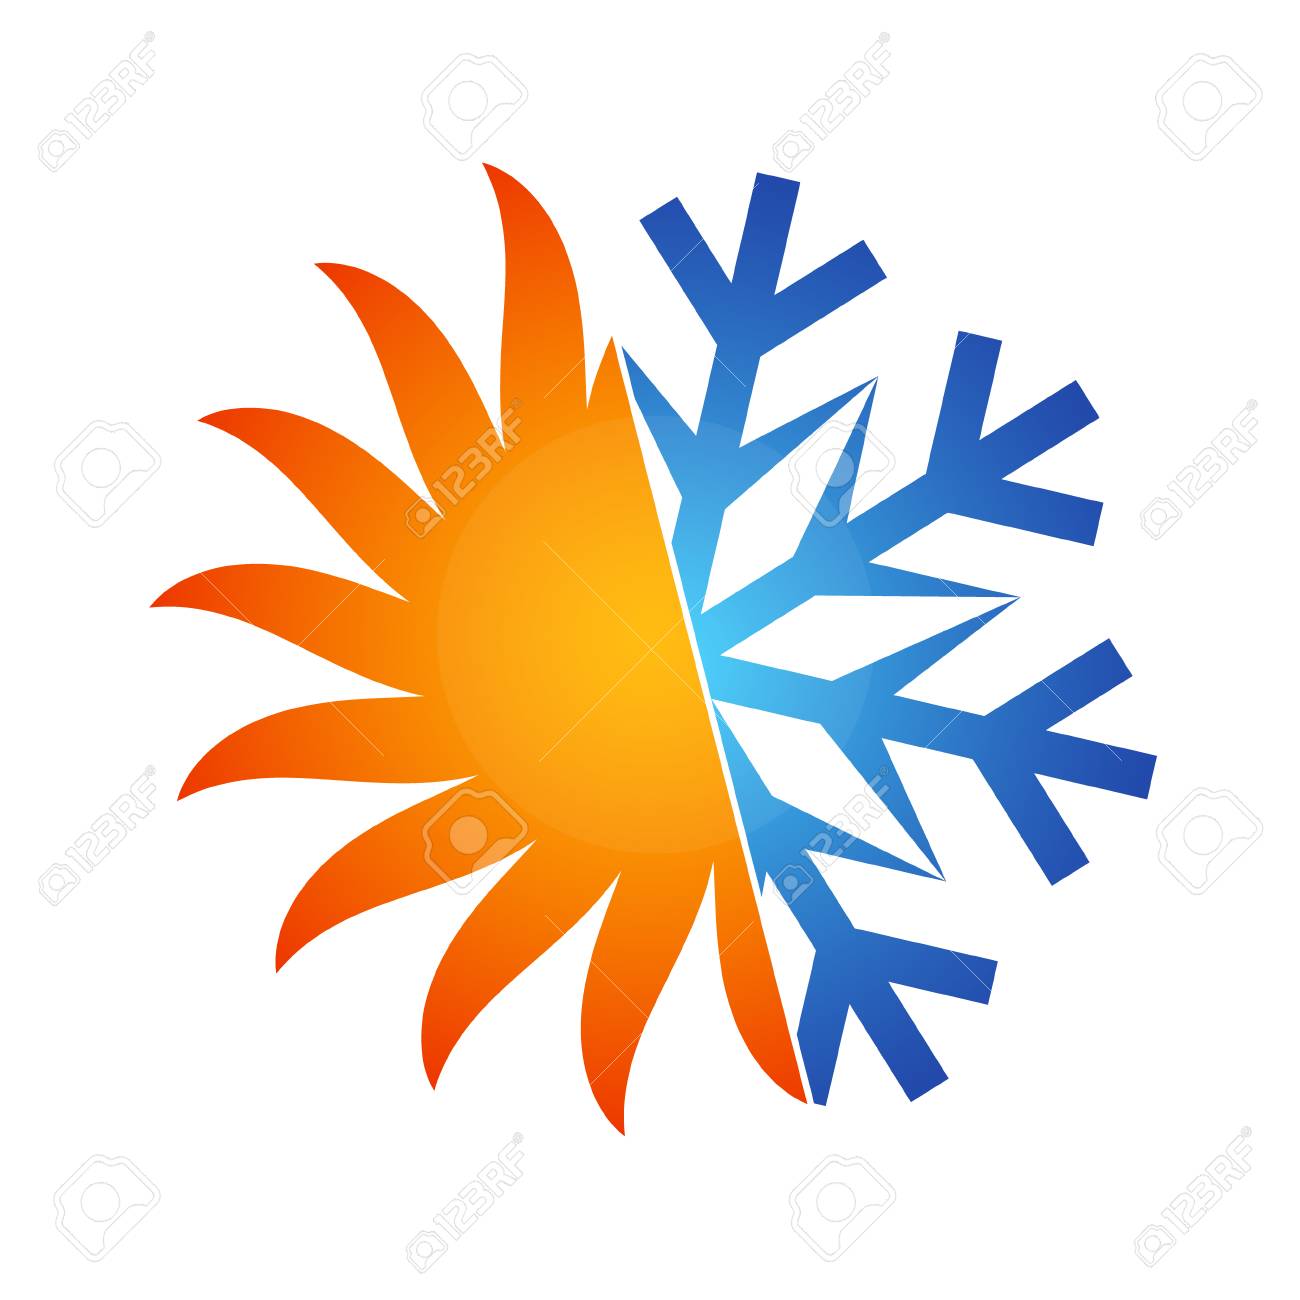 Snowflake clipart sun. Free snowflakes download clip